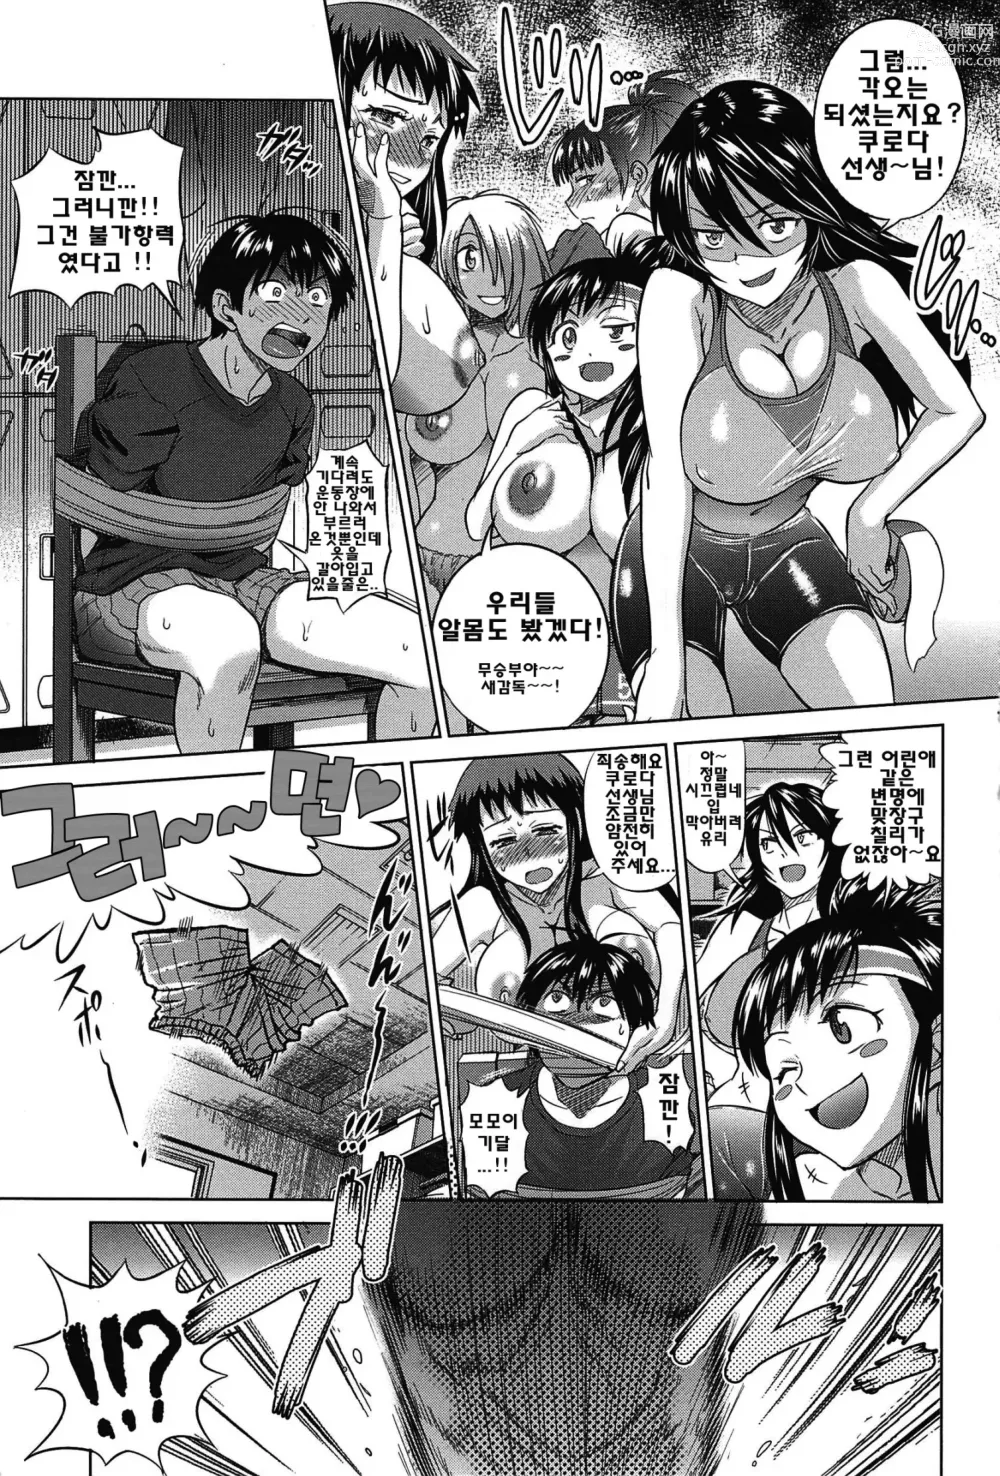 Page 5 of manga Joshi Luck!